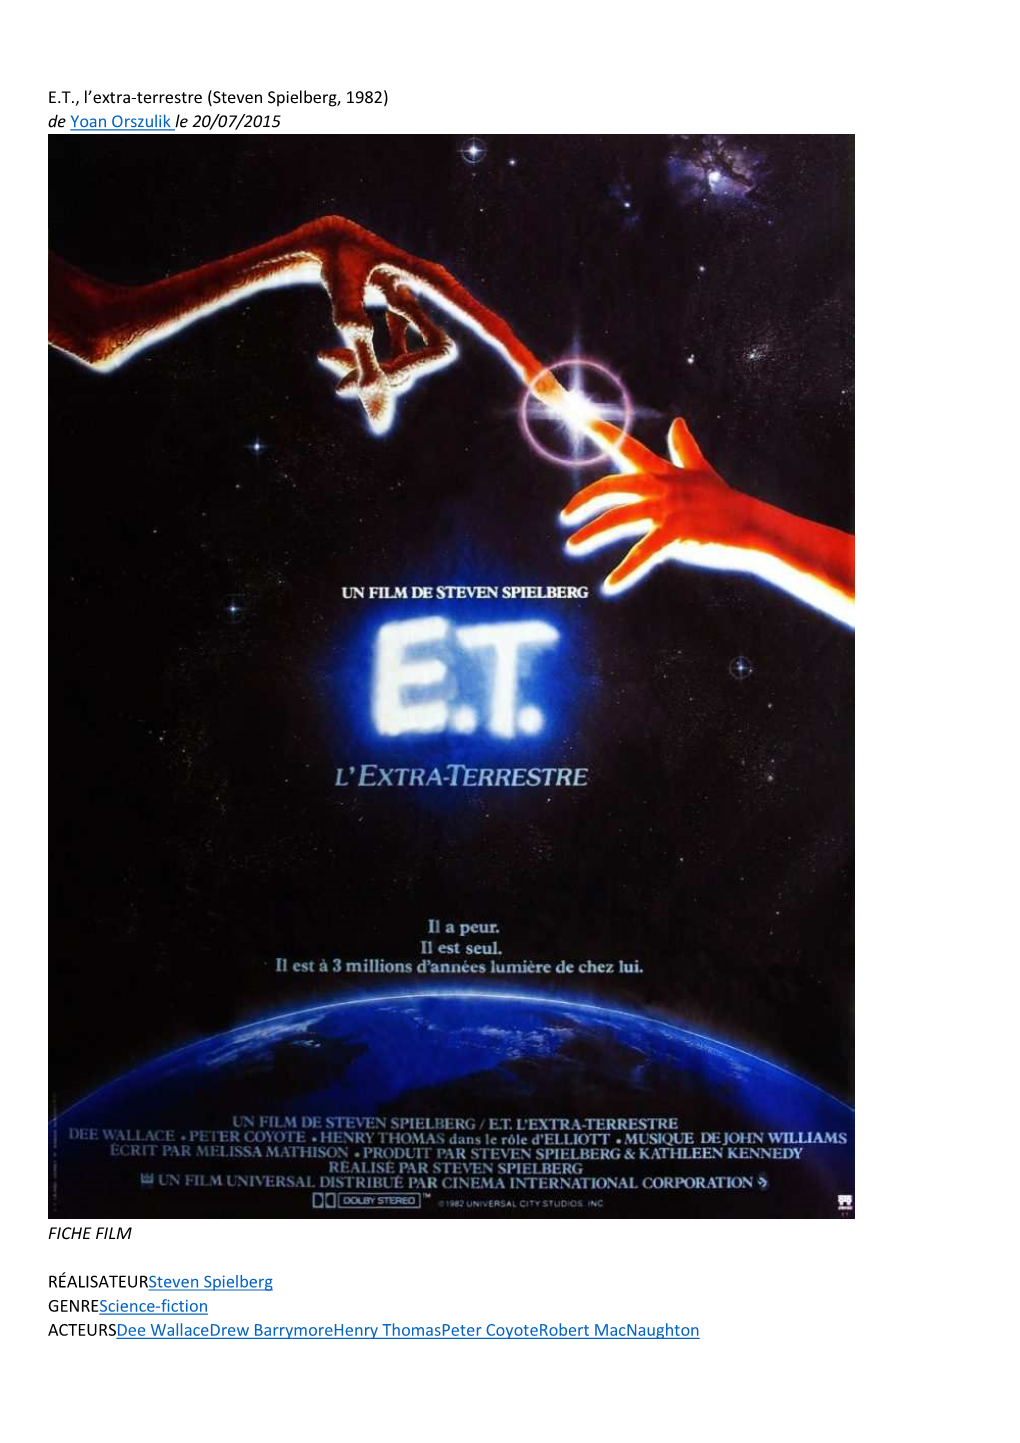 E.T., L'extra-Terrestre (Steven Spielberg, 1982) De Yoan Orszulik Le 20/07/2015 FICHE FILM Réalisateursteven Spielberg GENRES